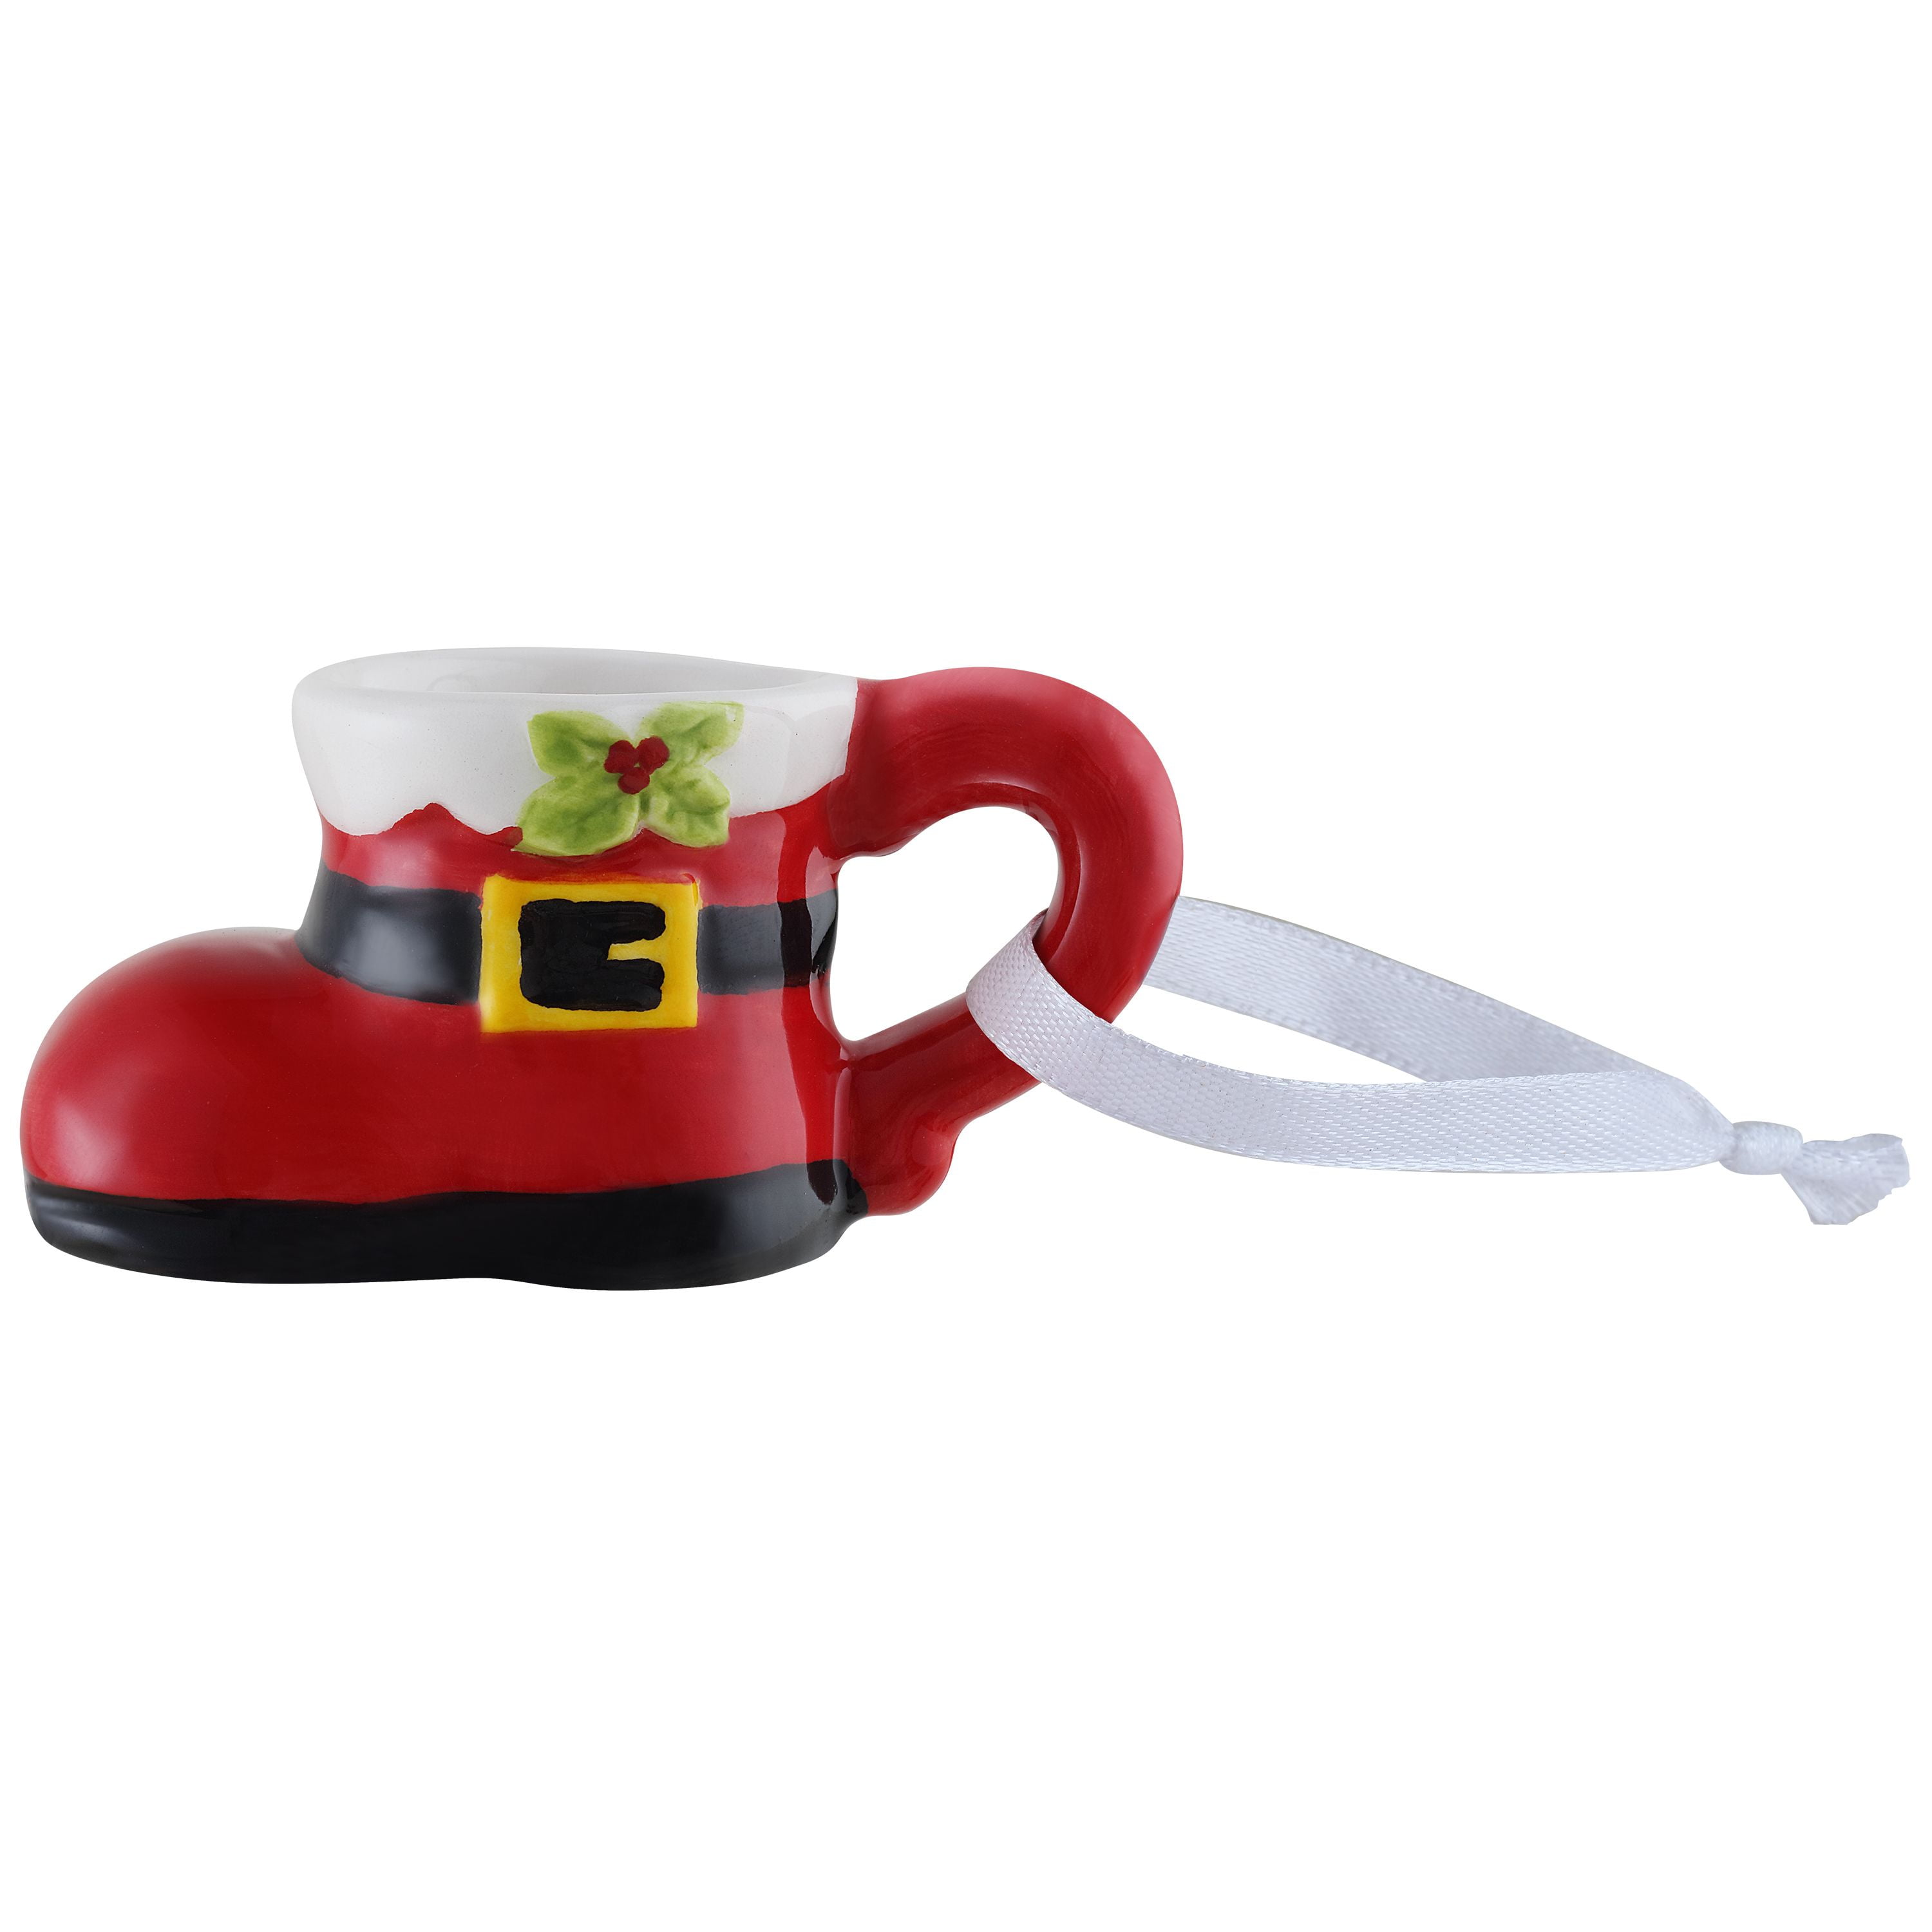 Mr. Christmas 1.5" Miniature Boot Mug Ornament Decoration, Red